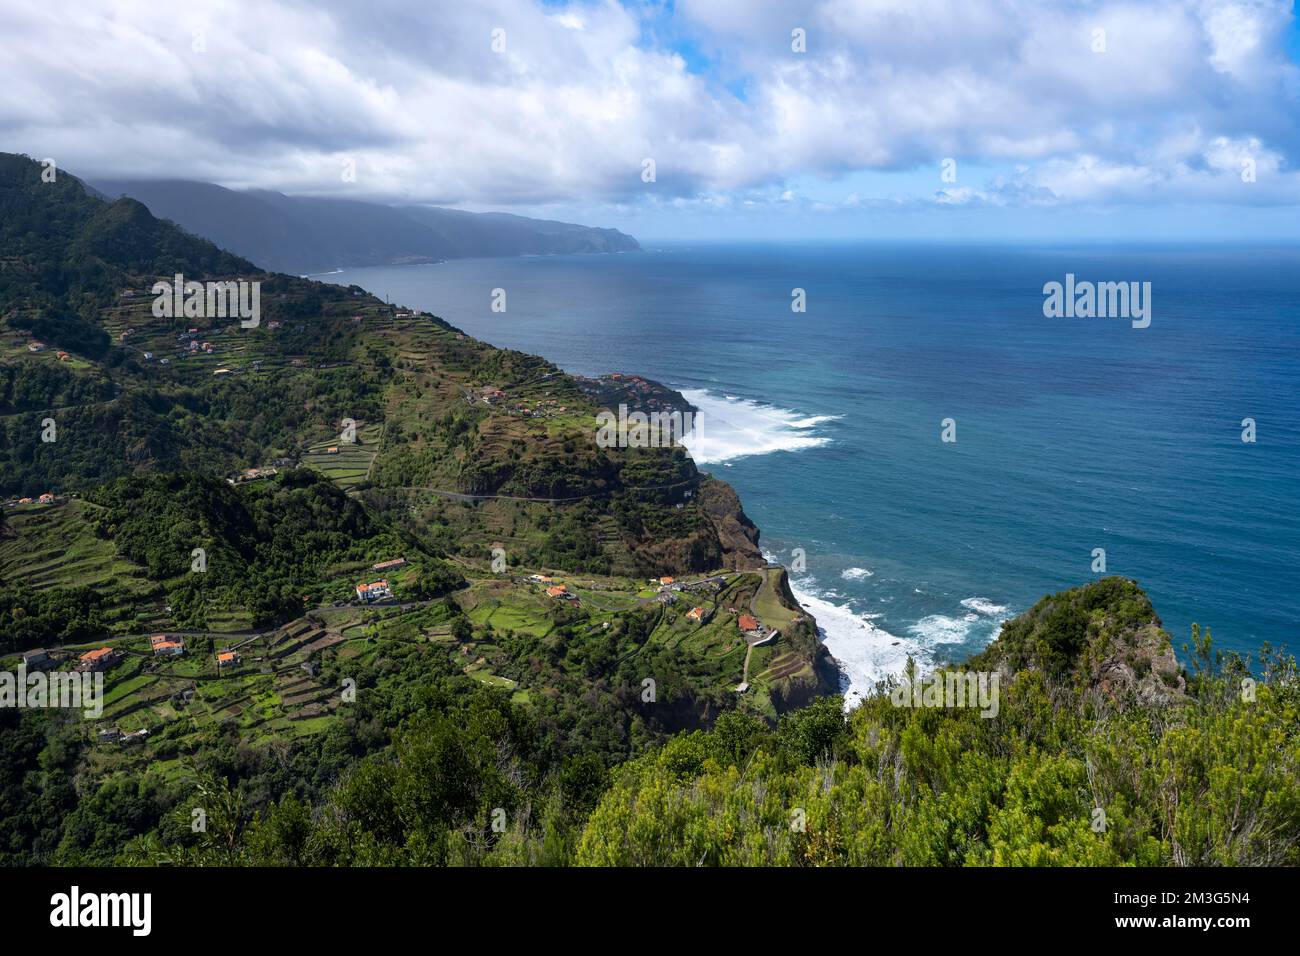 Ridge of Pico do Alto, view of coast and sea, Boaventura, Madeira, Portugal Stock Photo